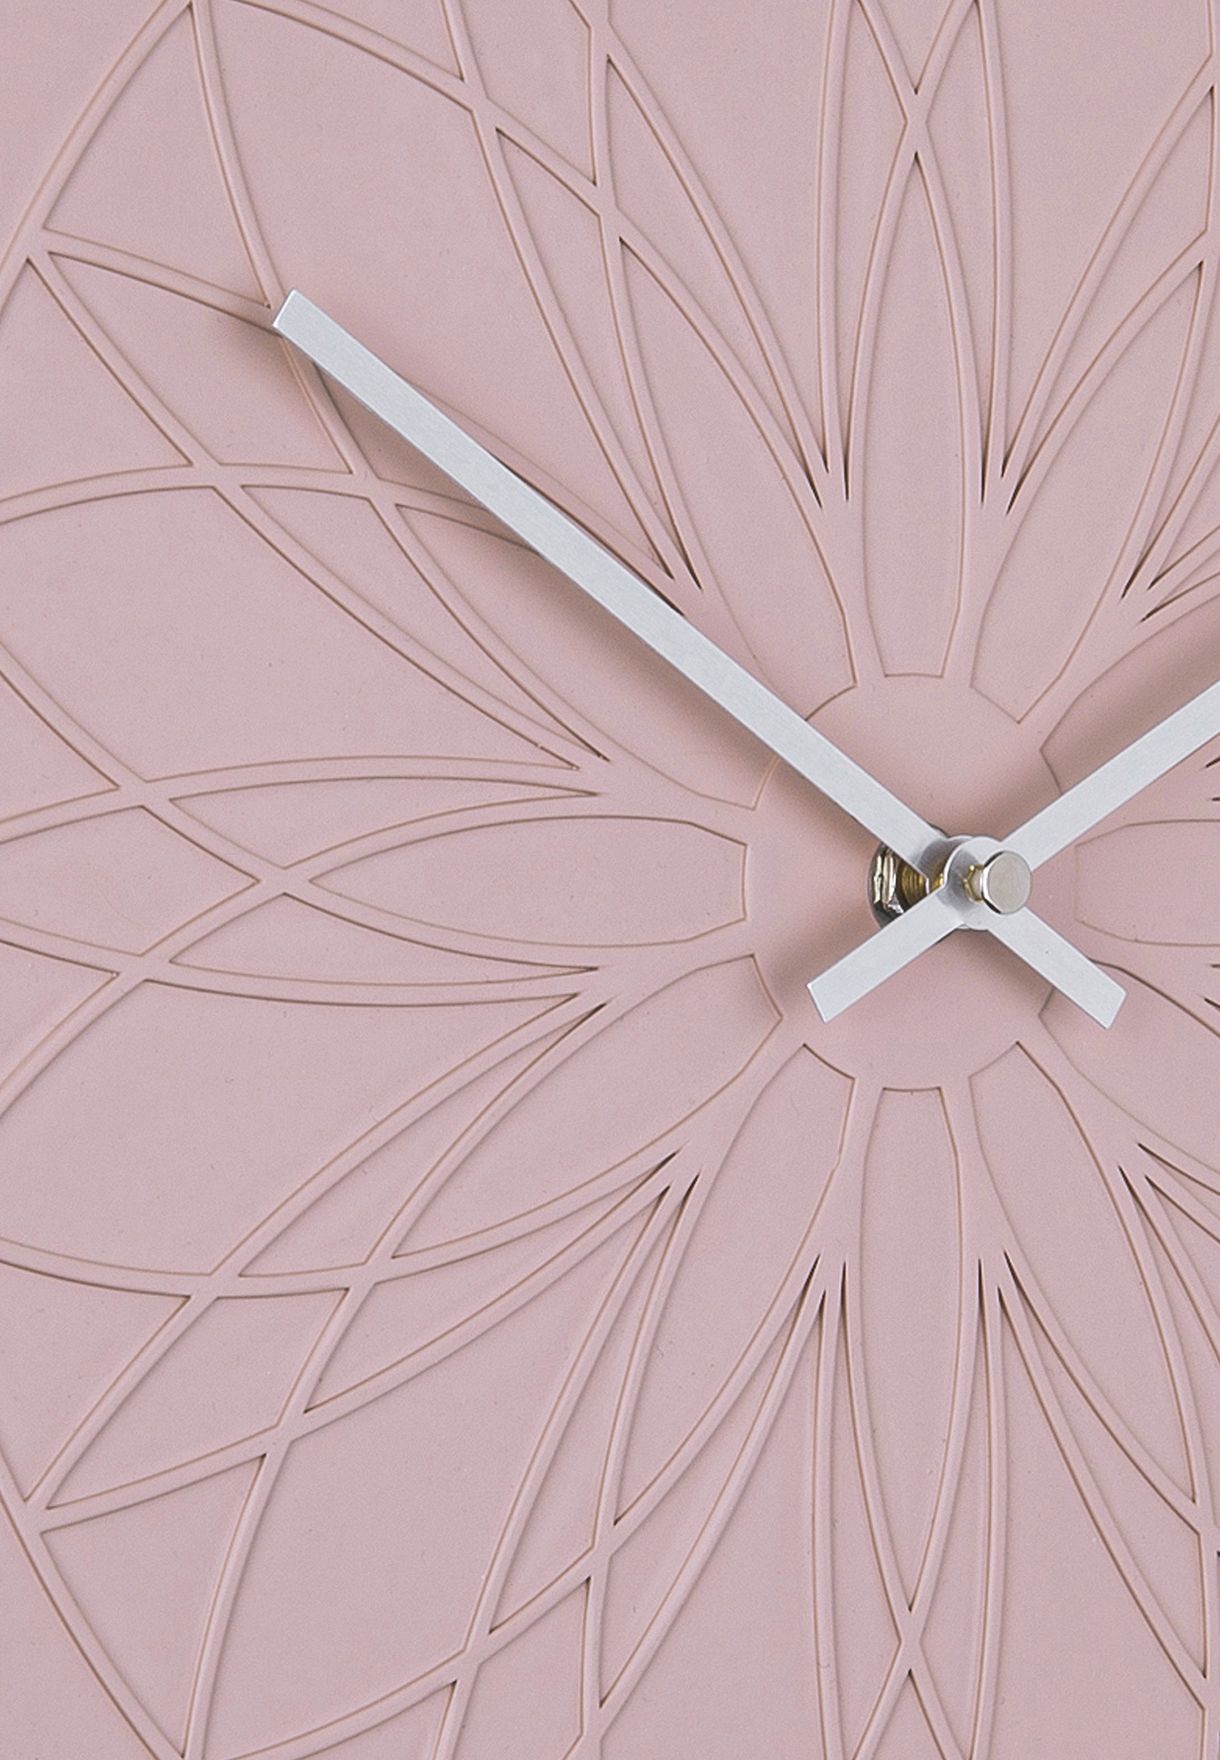 Pink Fairytale Wall Clock